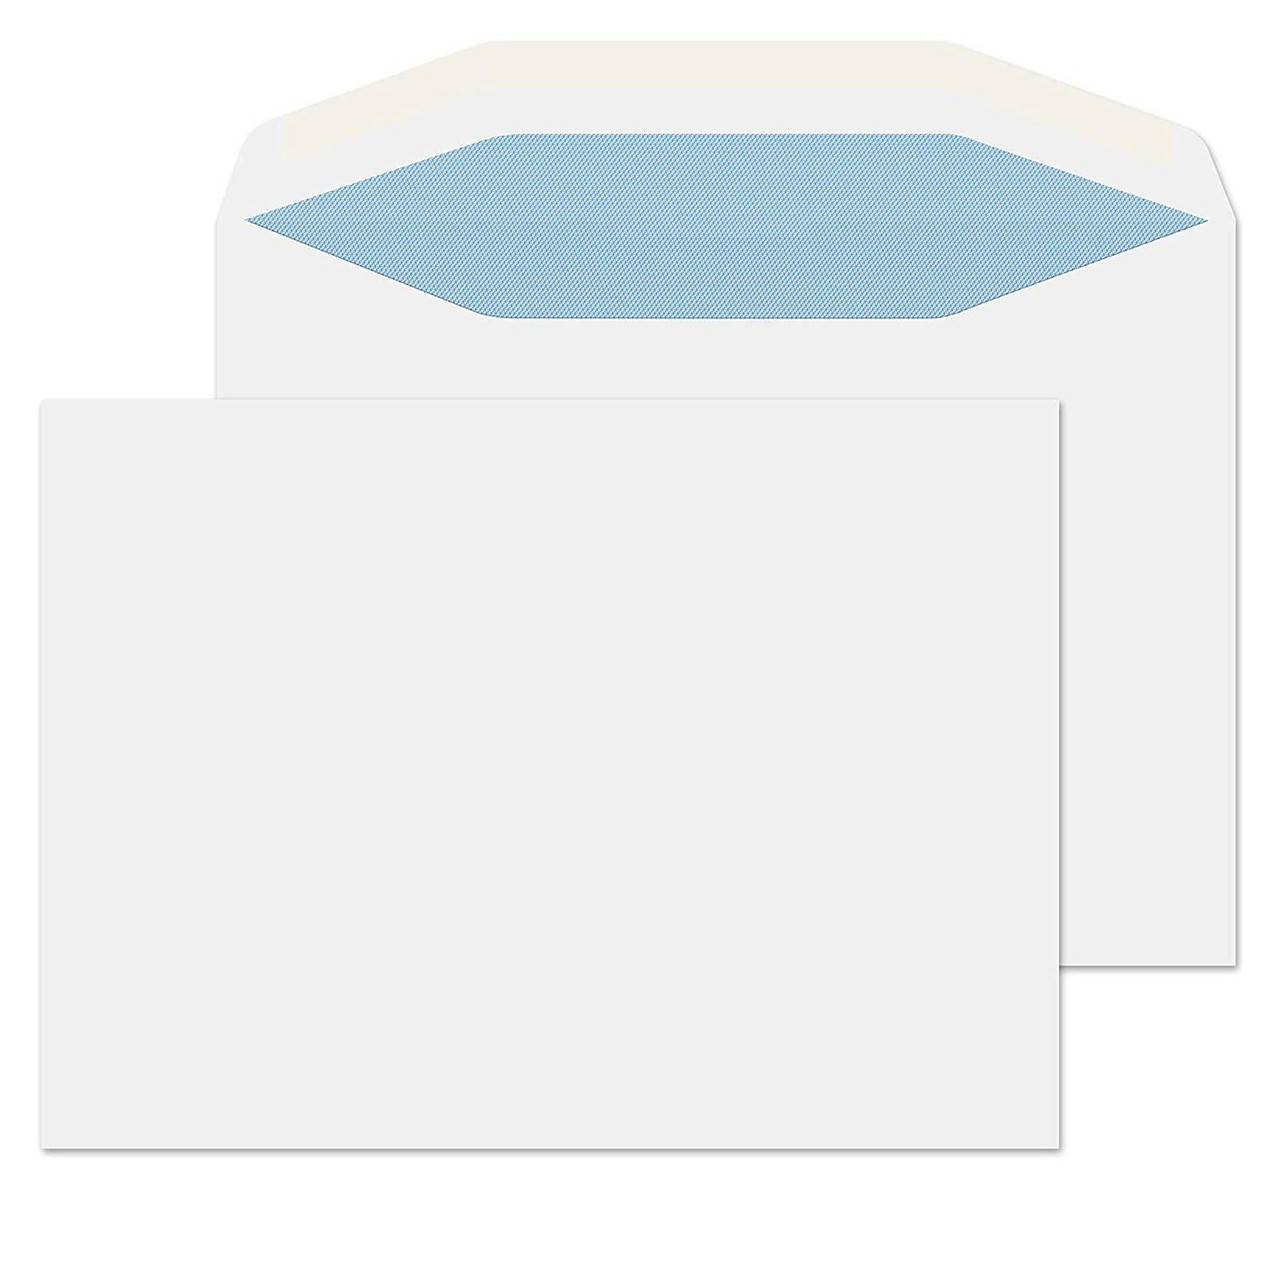 Folder Inserter Envelopes - EXTRA WIDE 238mm C5 Non-Window - 1000pcs